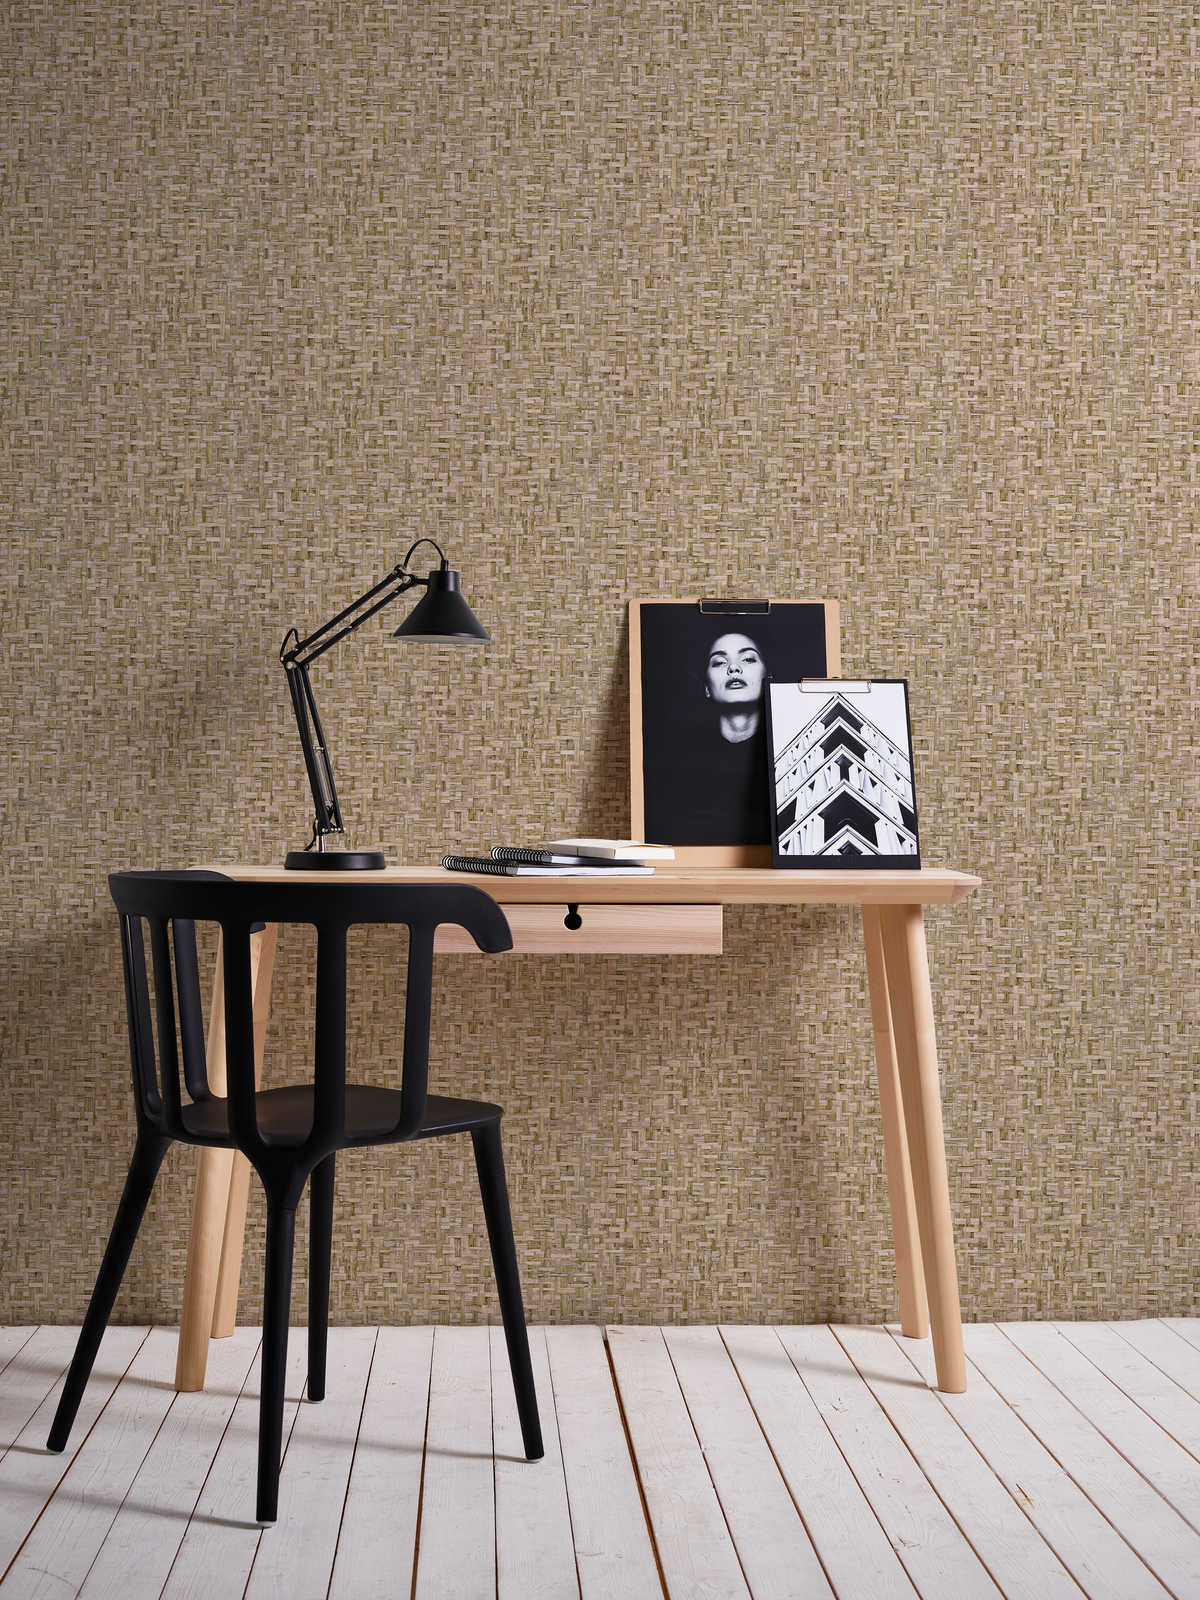             Wallpaper light brown wood look with fiber pattern - brown, beige
        